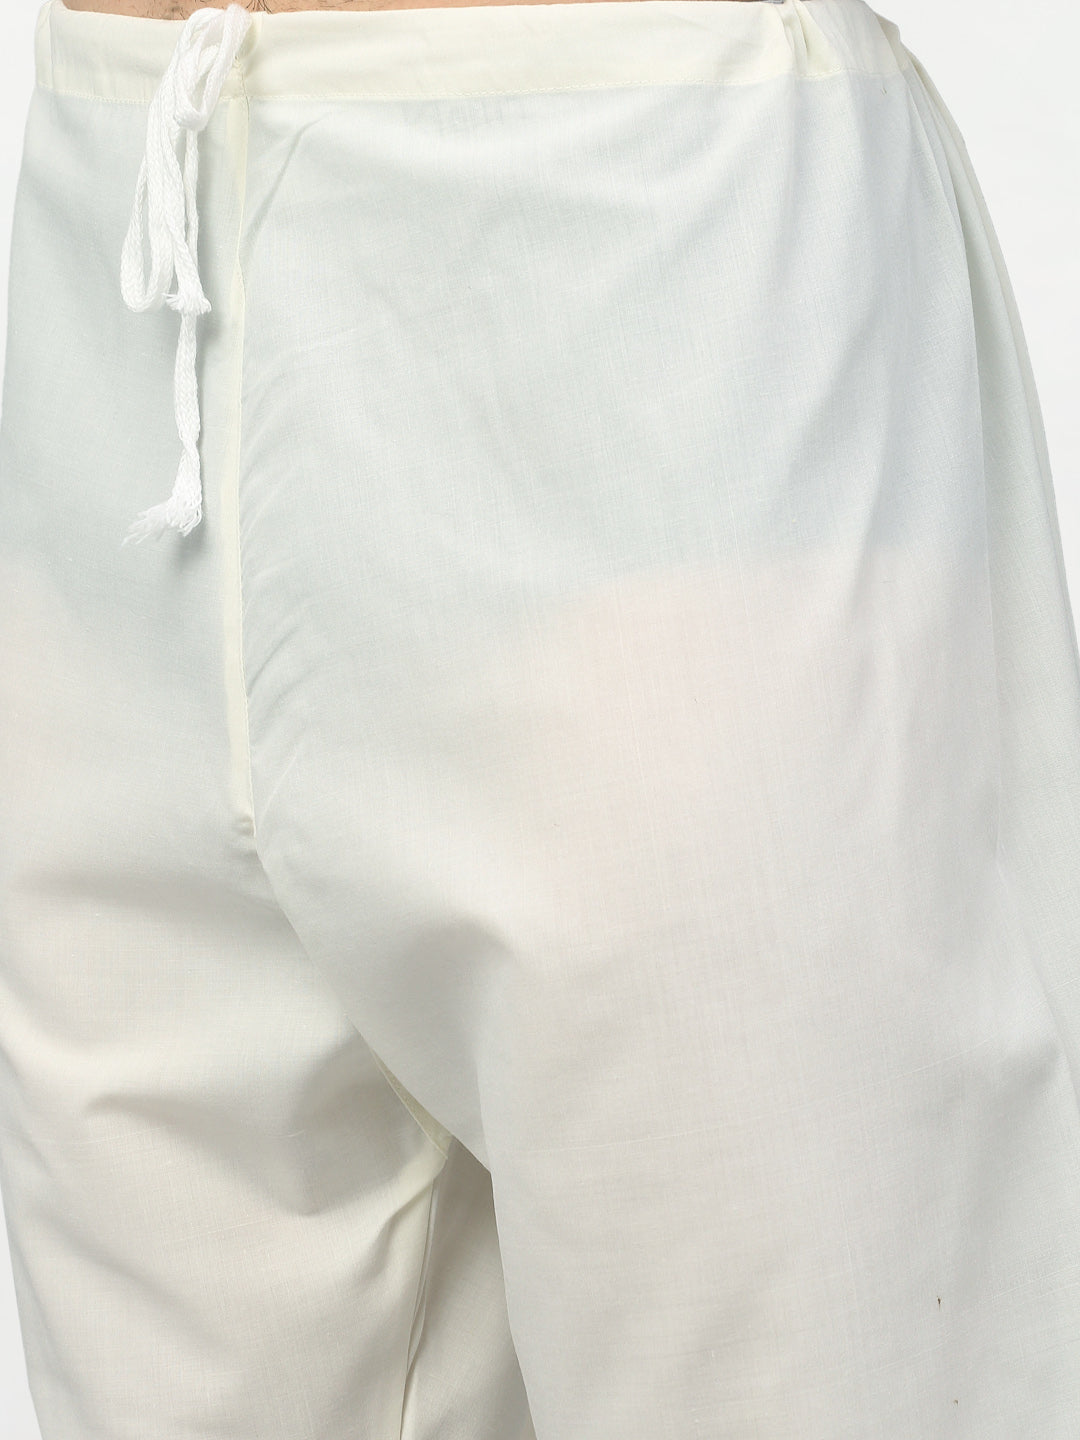 Men's Olive Printed Cotton Kurta Payjama Sets ( JOKP 614 Olive ) - Virat Fashions